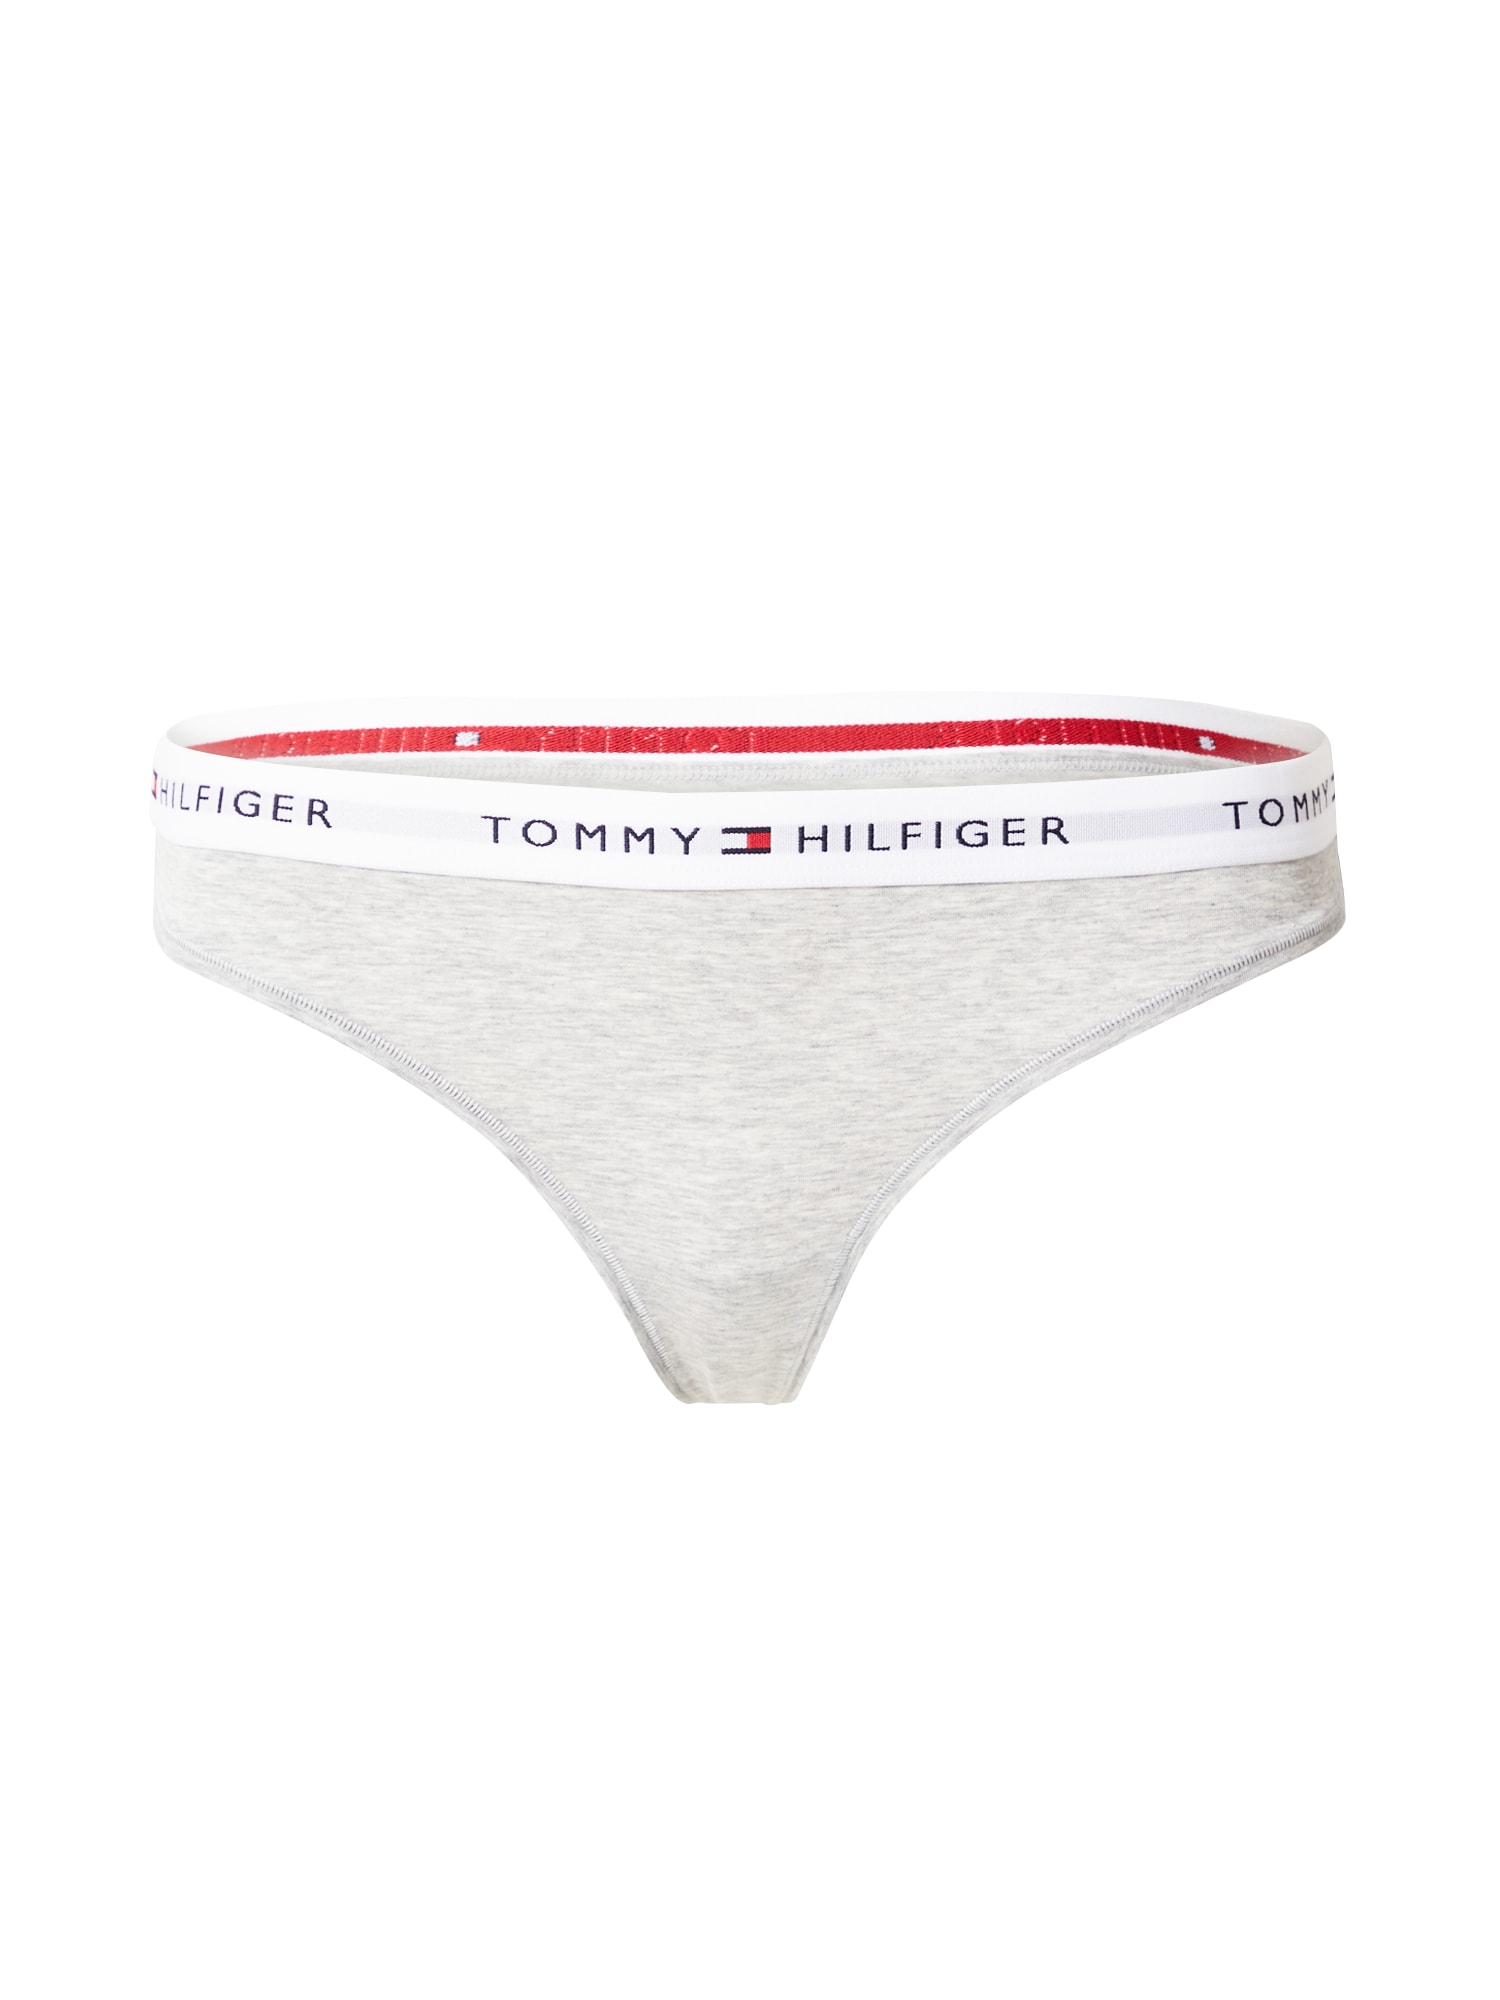 Tommy Hilfiger Underwear Siaurikės tamsiai mėlyna / margai pilka / tamsiai raudona / balta